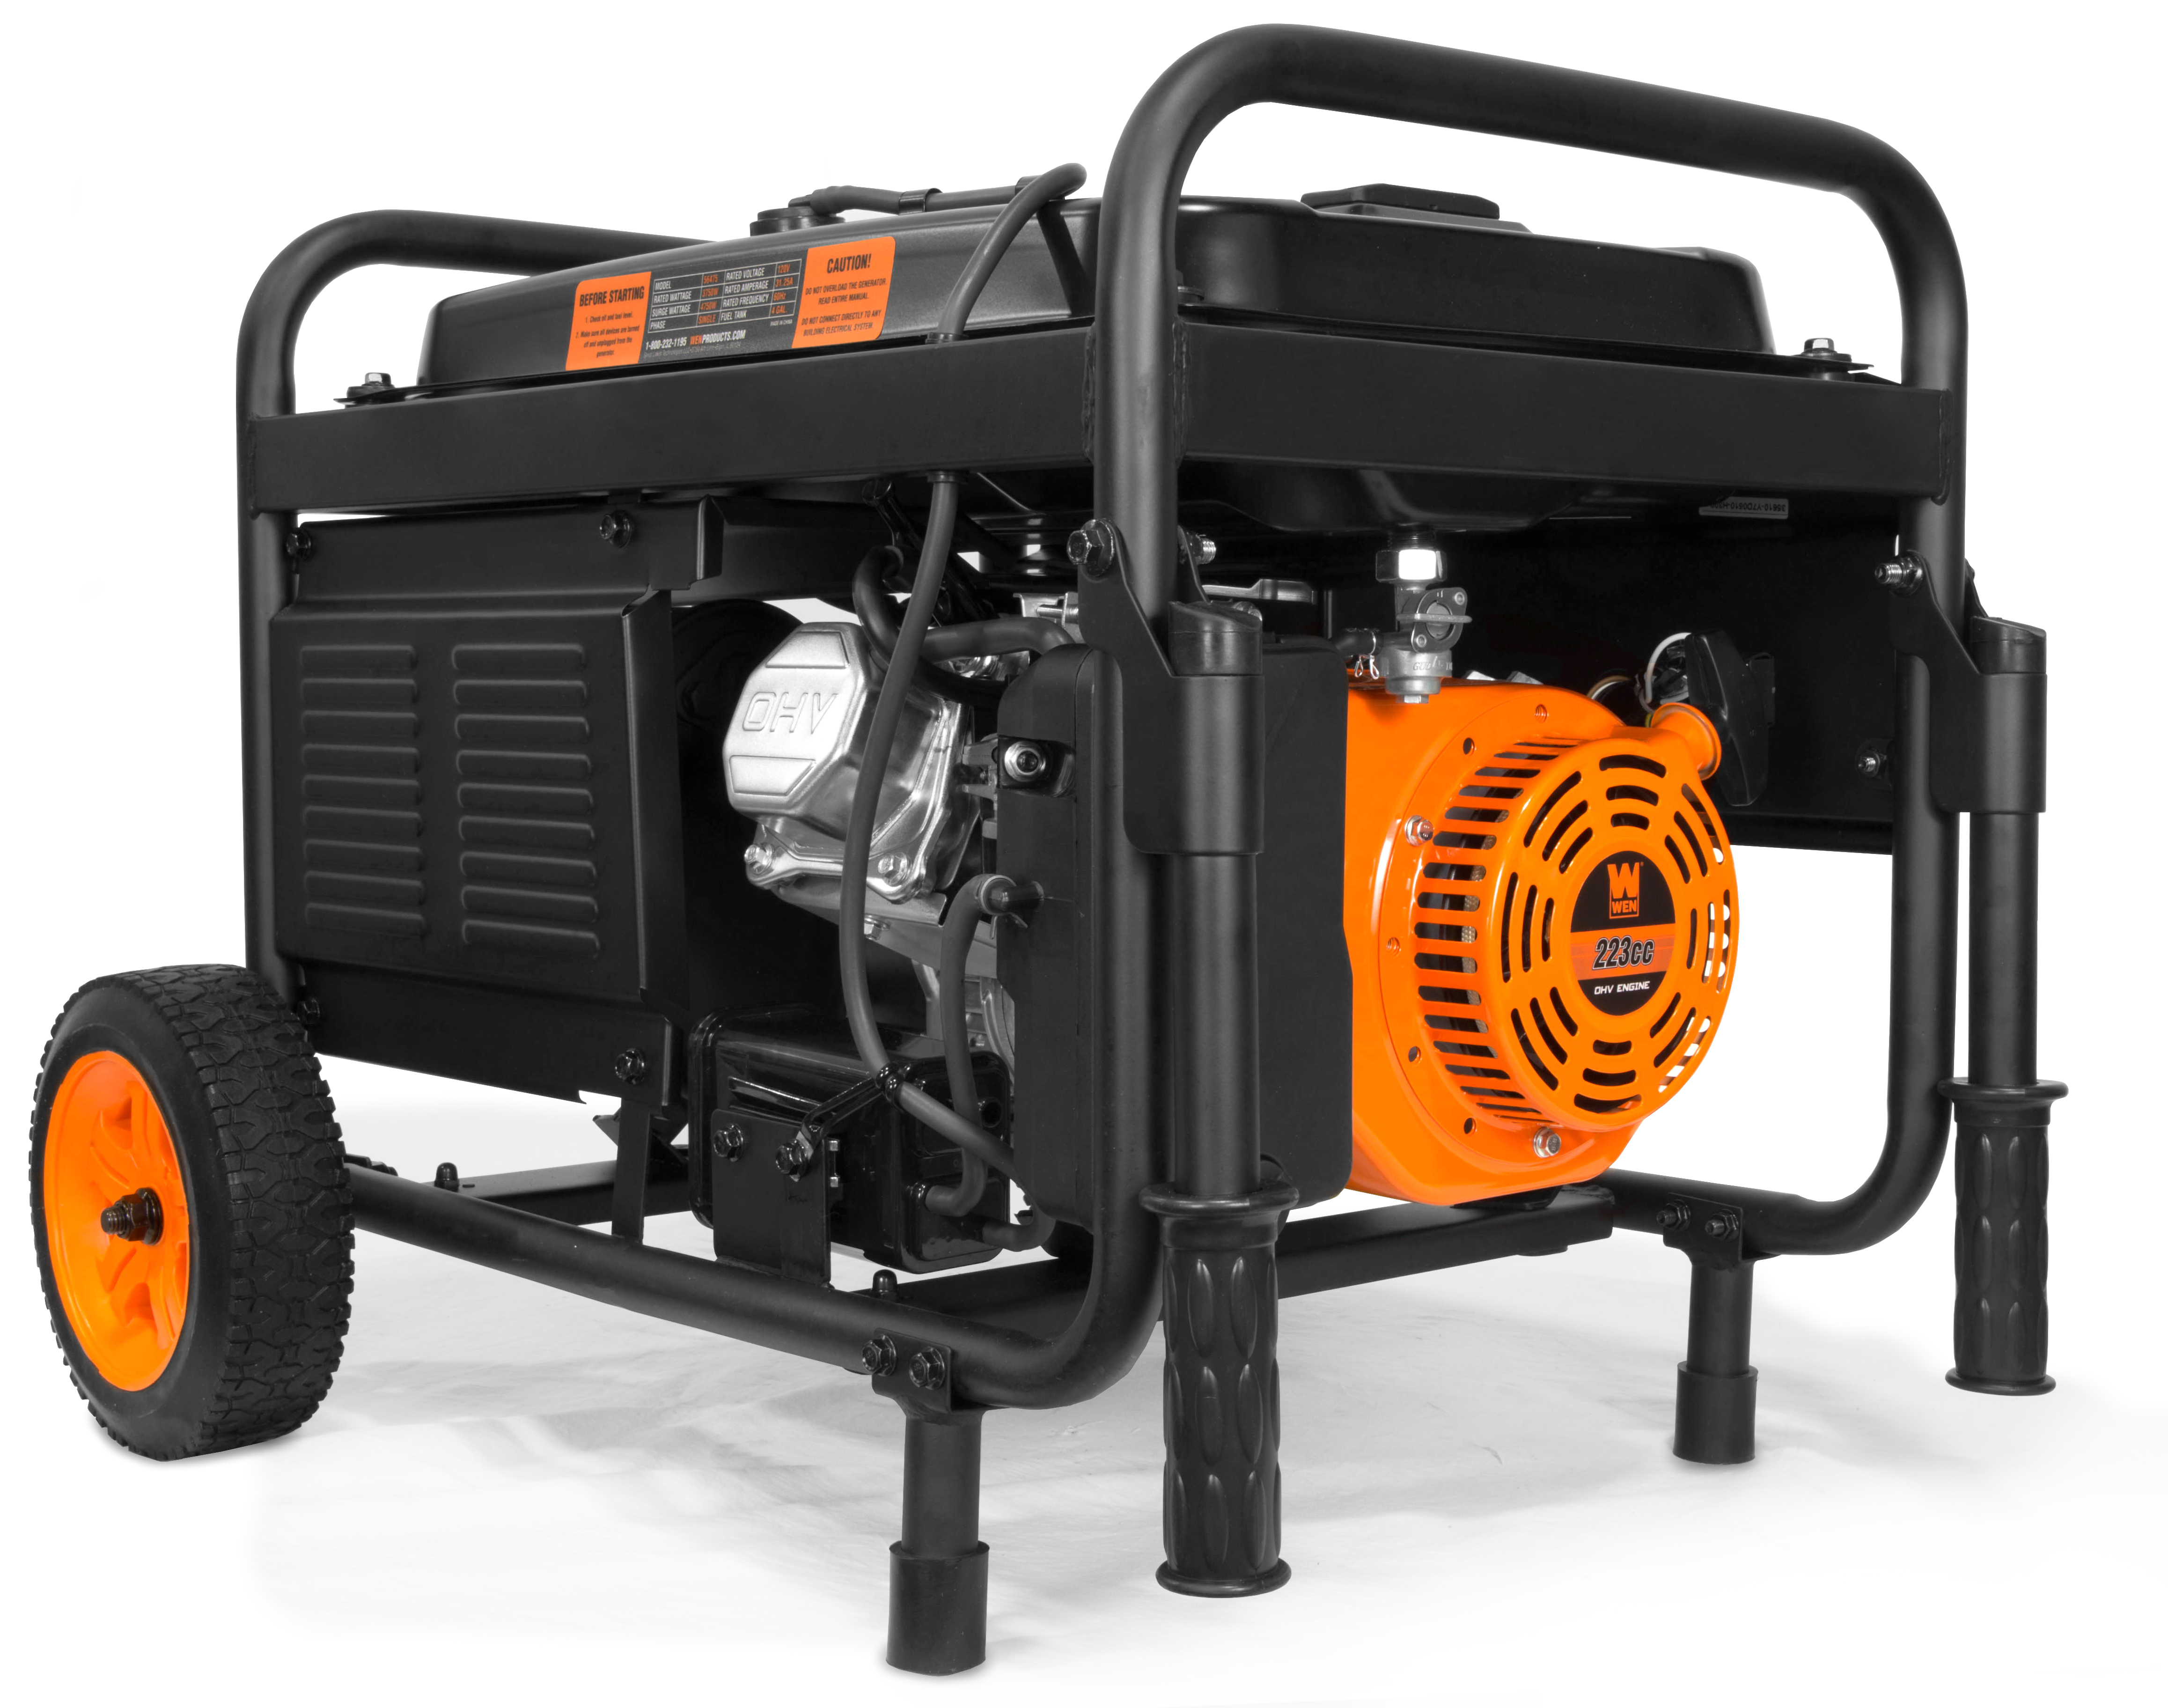 WEN 4750-Watt Portable Generator with Electric Start and Wheel Kit - image 2 of 7